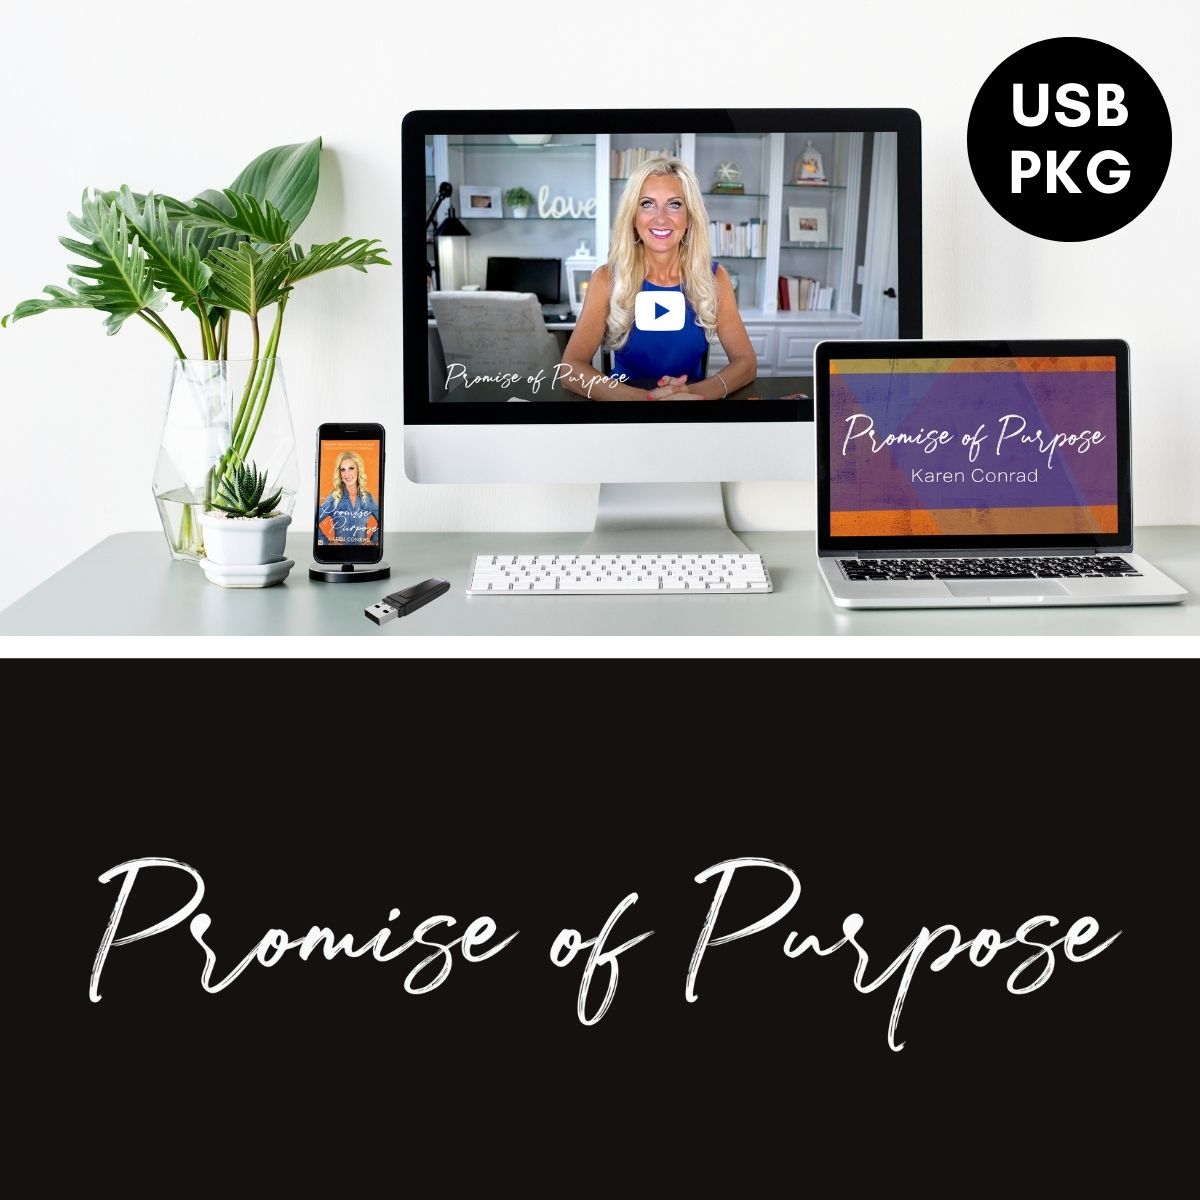 The Promise of Purpose USB PKG